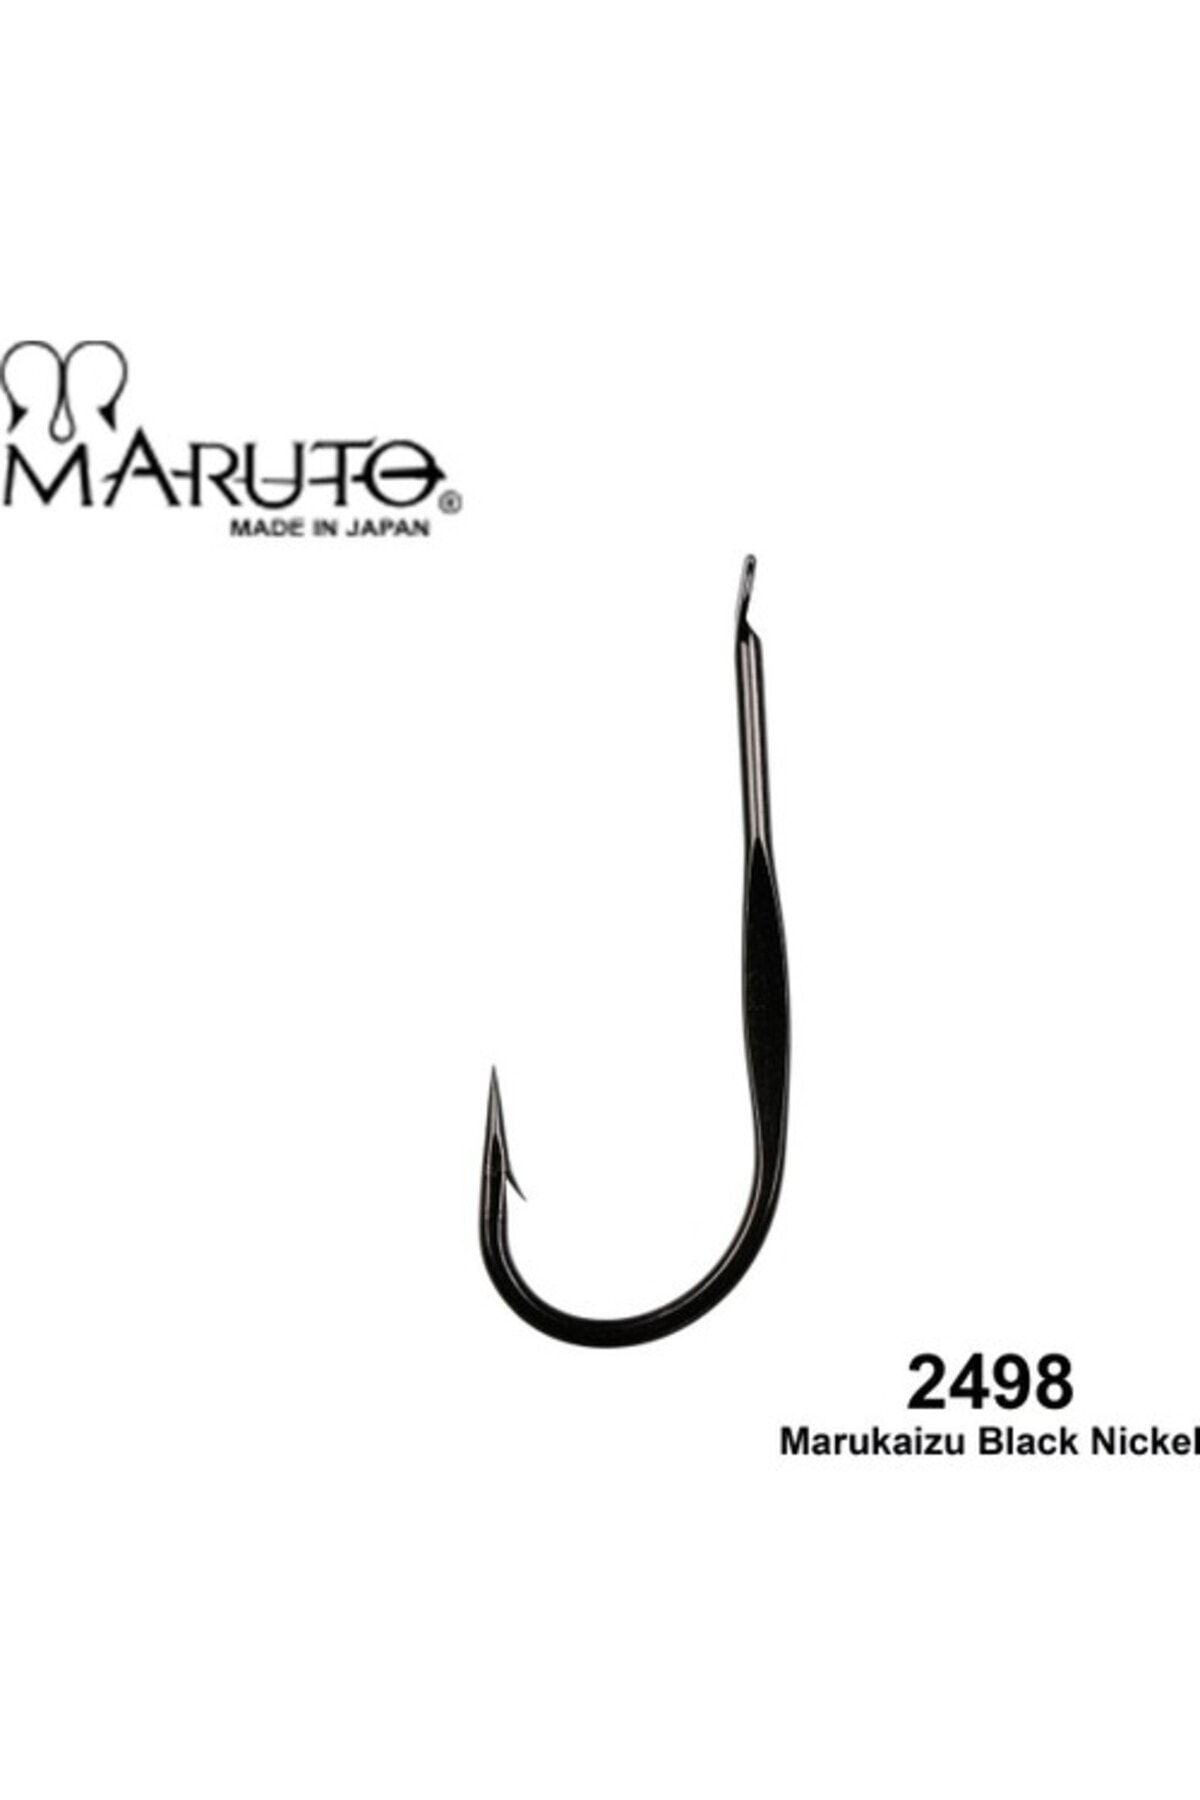 Maruto 2498 Bn (Black Nickel) Iğne